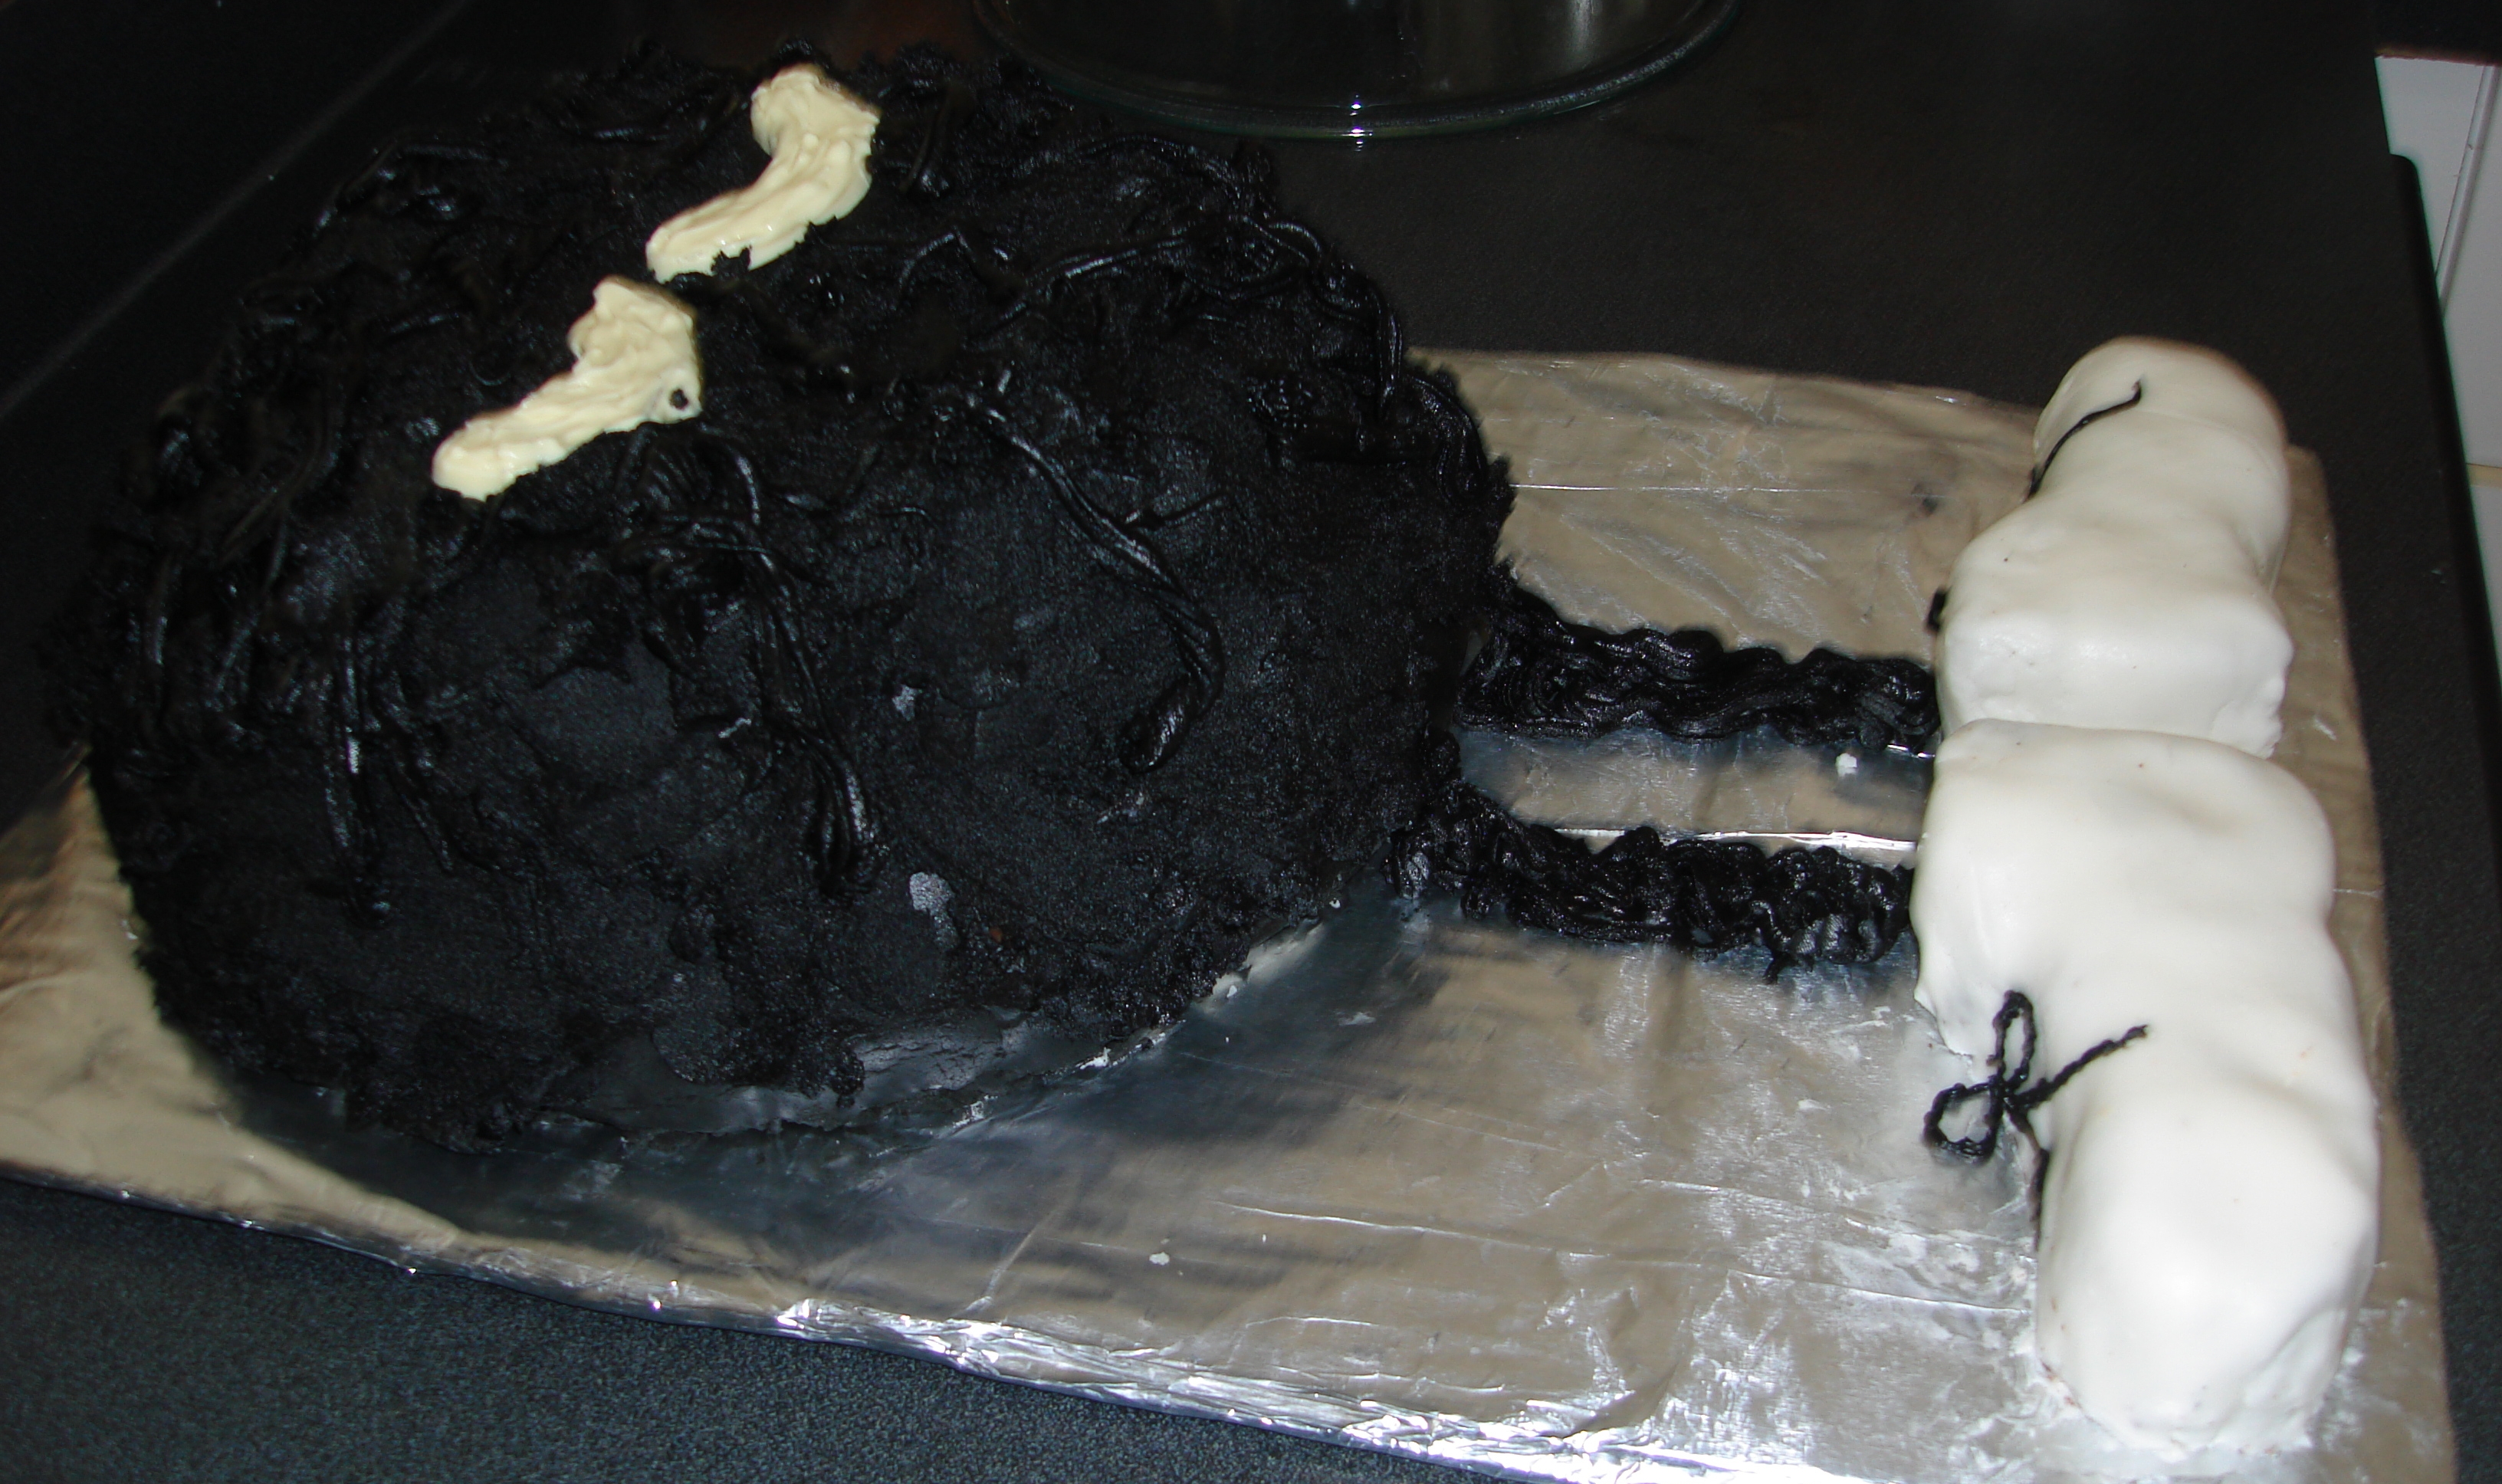 Grumpy fuzzball cake: it's even three dimensional!